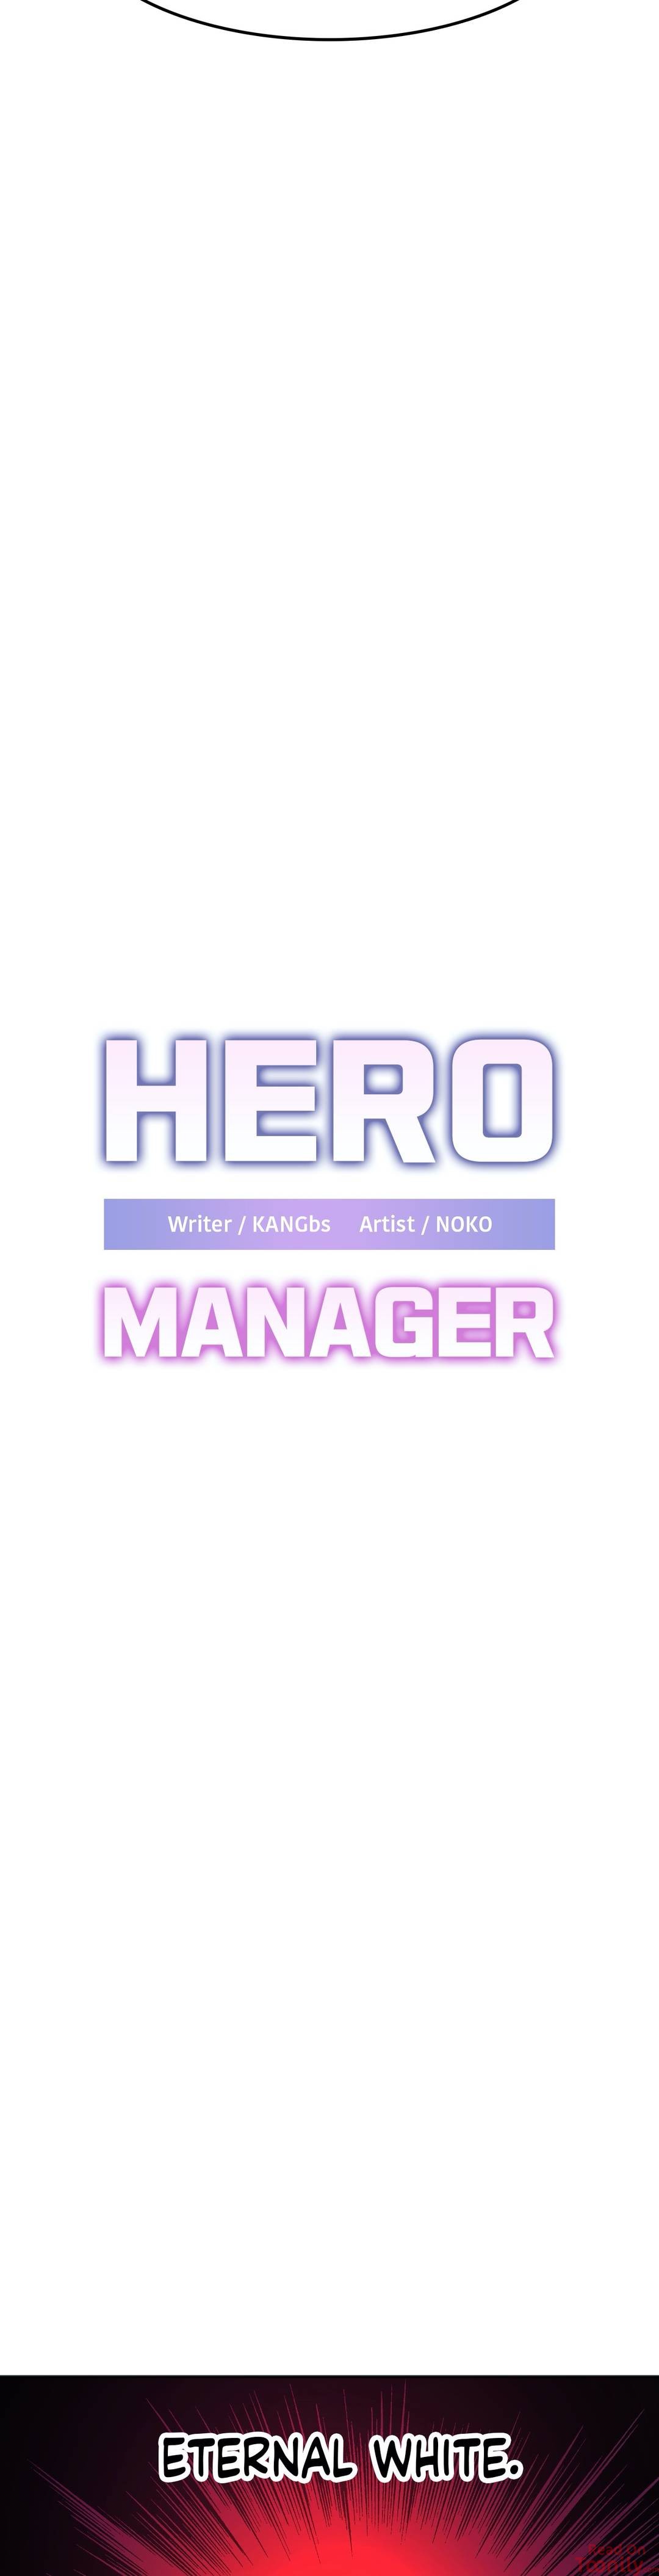 Hero Manager image